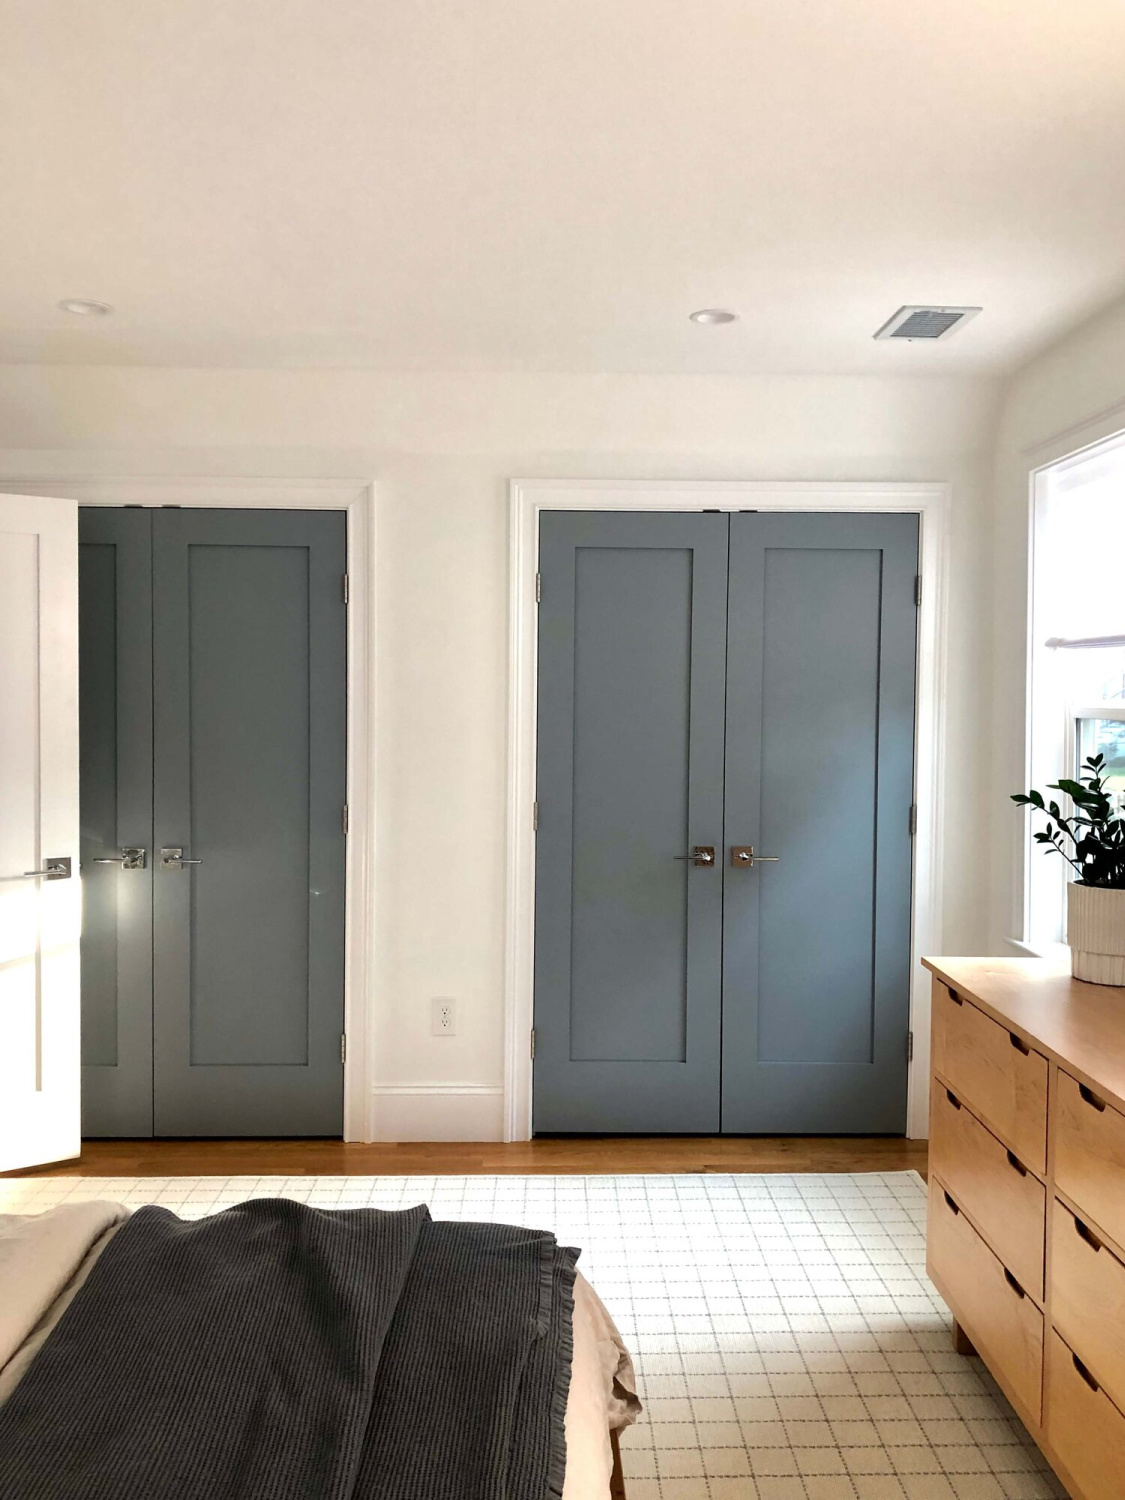 Closet doors painted Clare Set in Stone paint color - MStarrDesign. #claresetinstone #bluegraypaintcolors